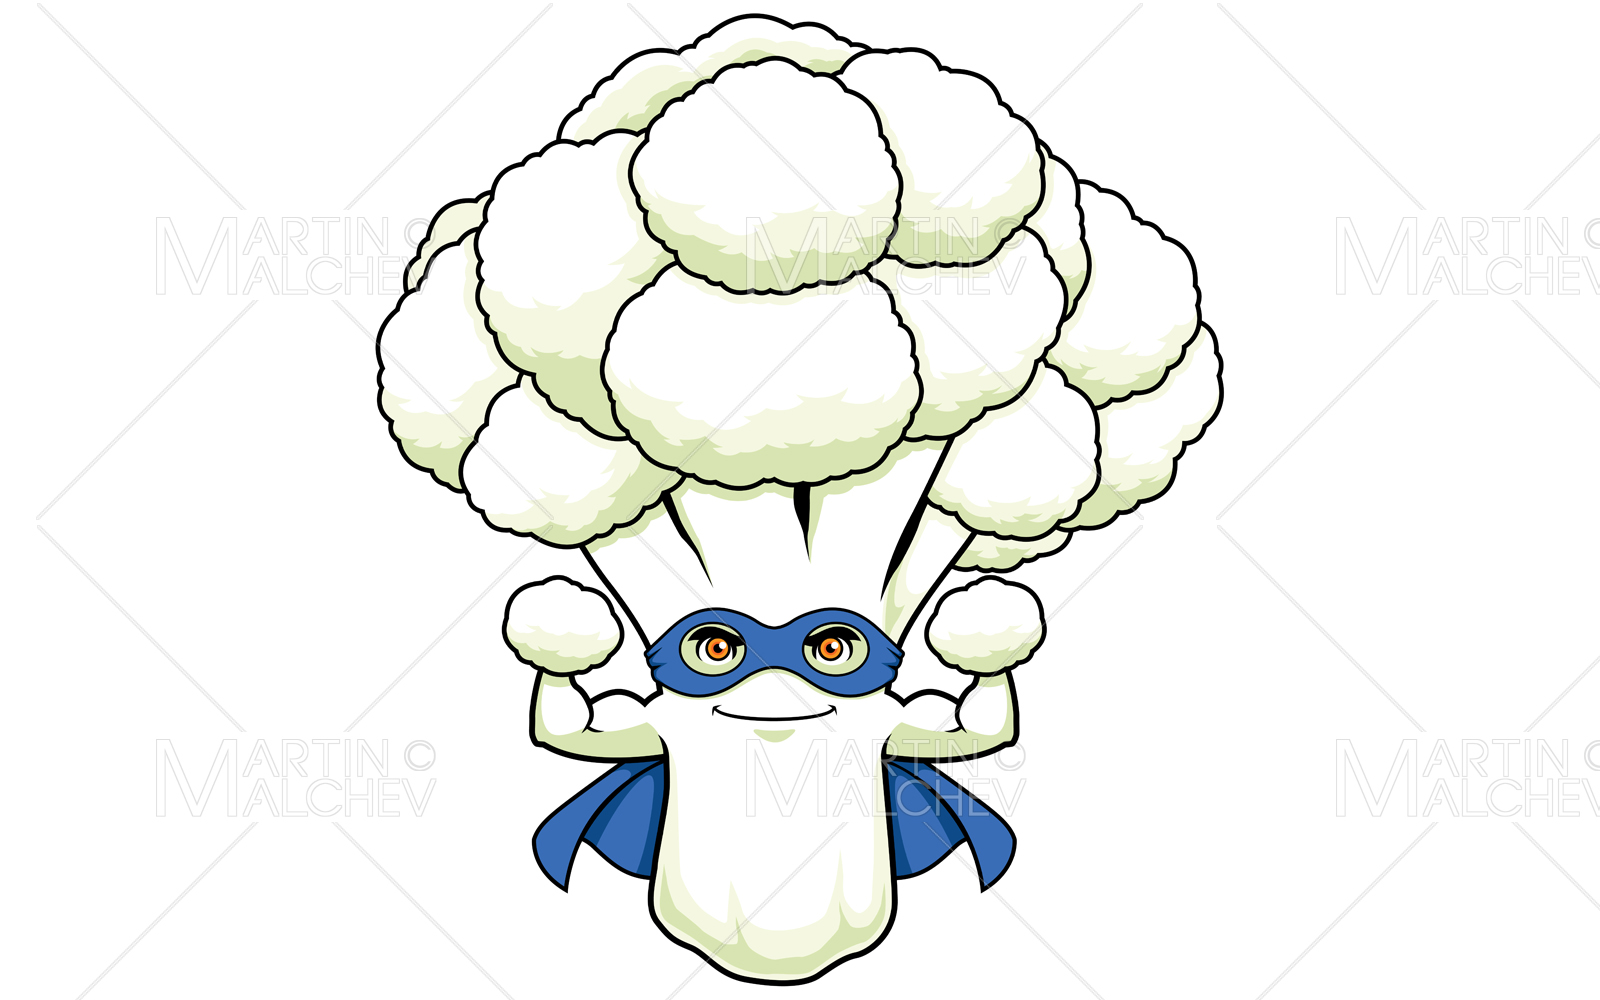 Cauliflower Superhero Mascot Vector Illustration